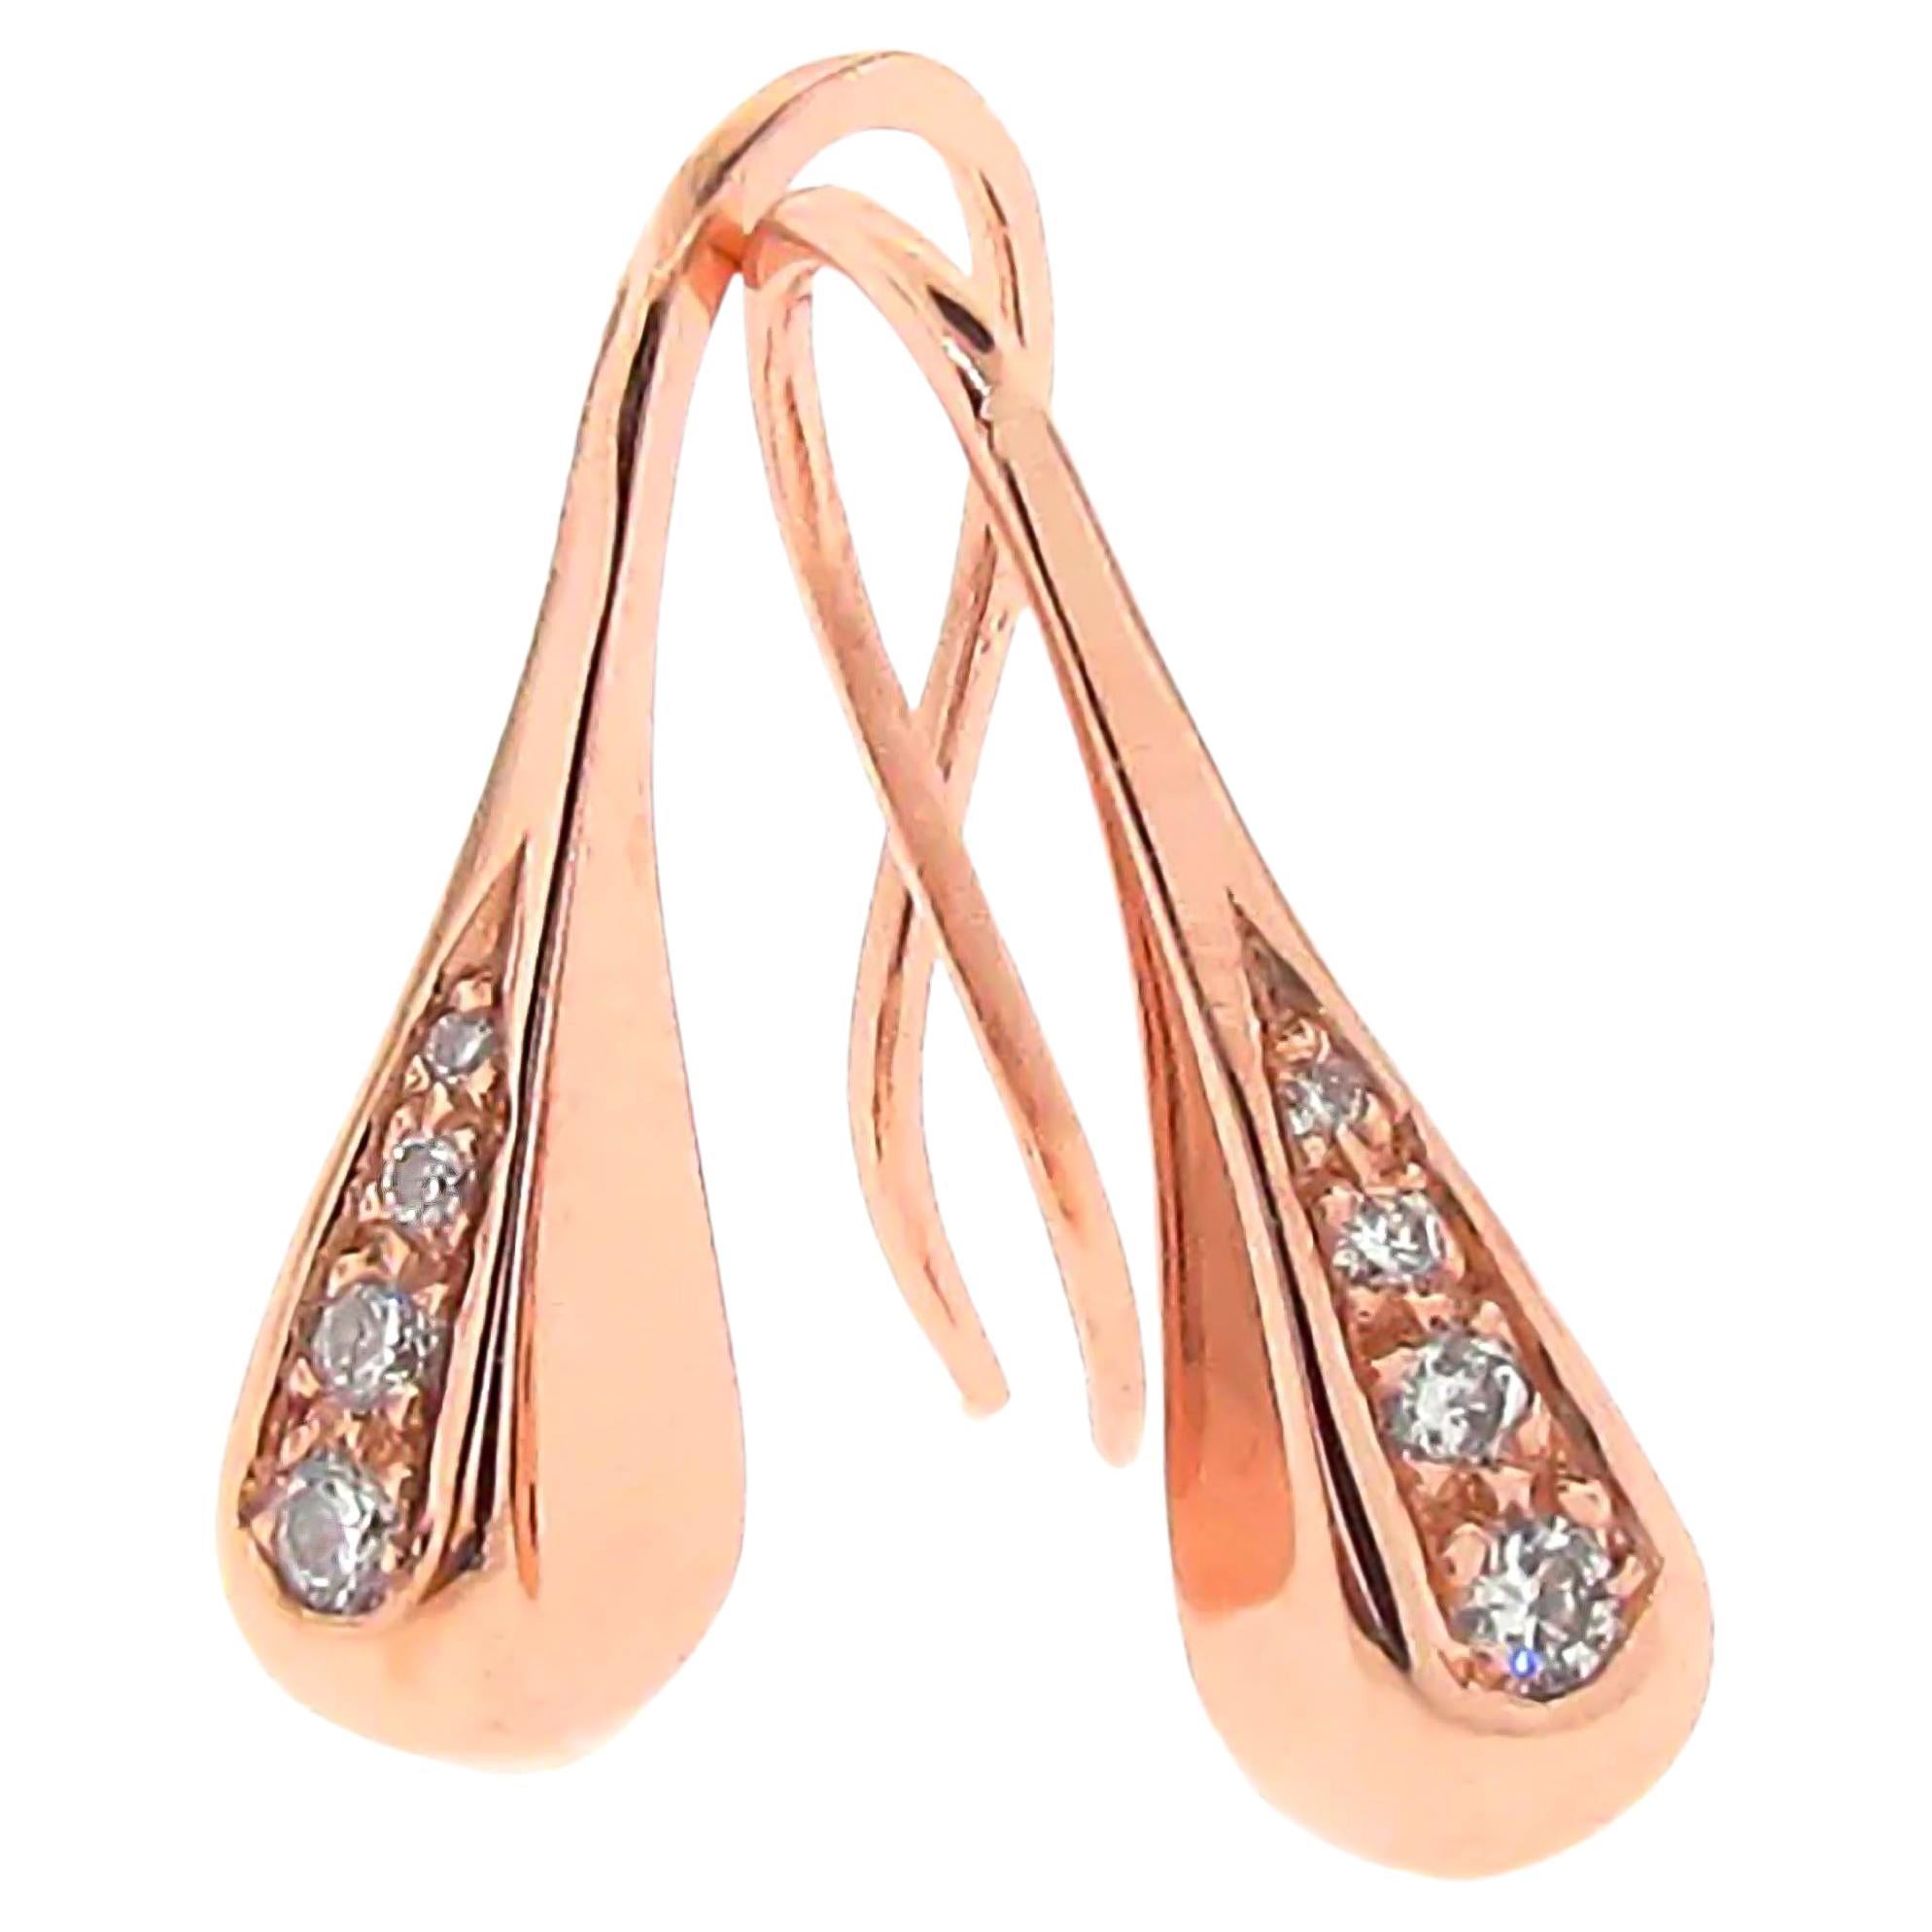 Solid Rose Gold Diamond Droplet earrings in 9k 